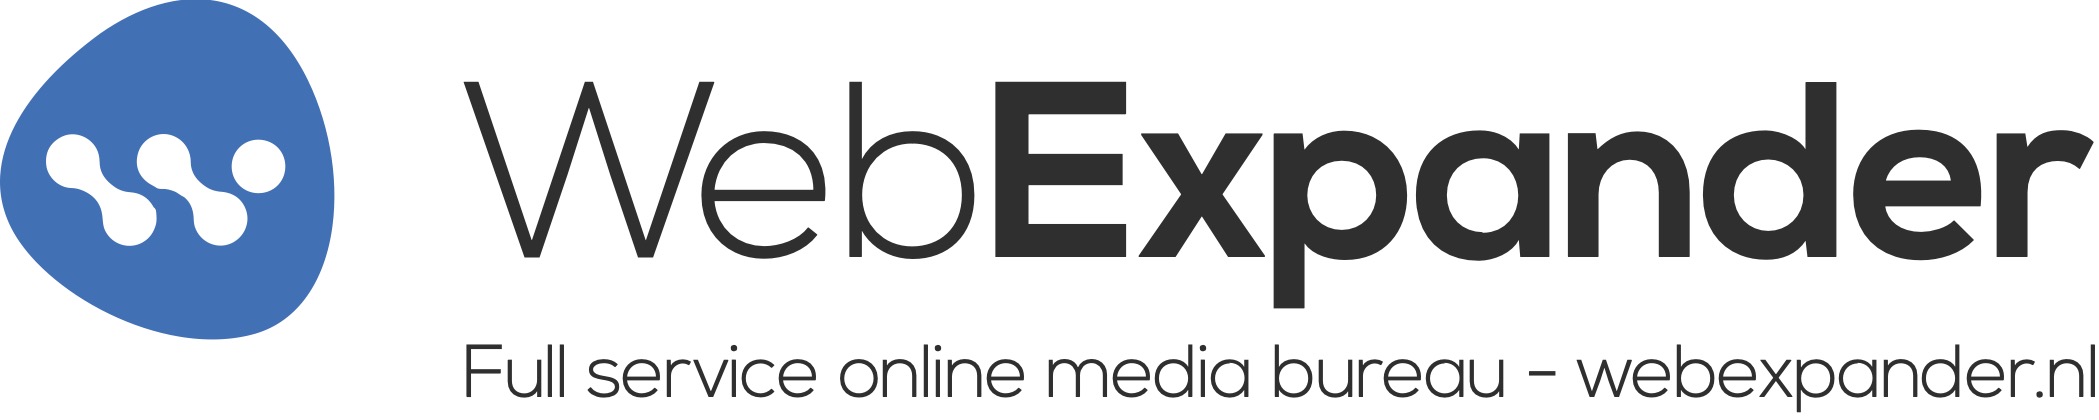 web-expander-logo